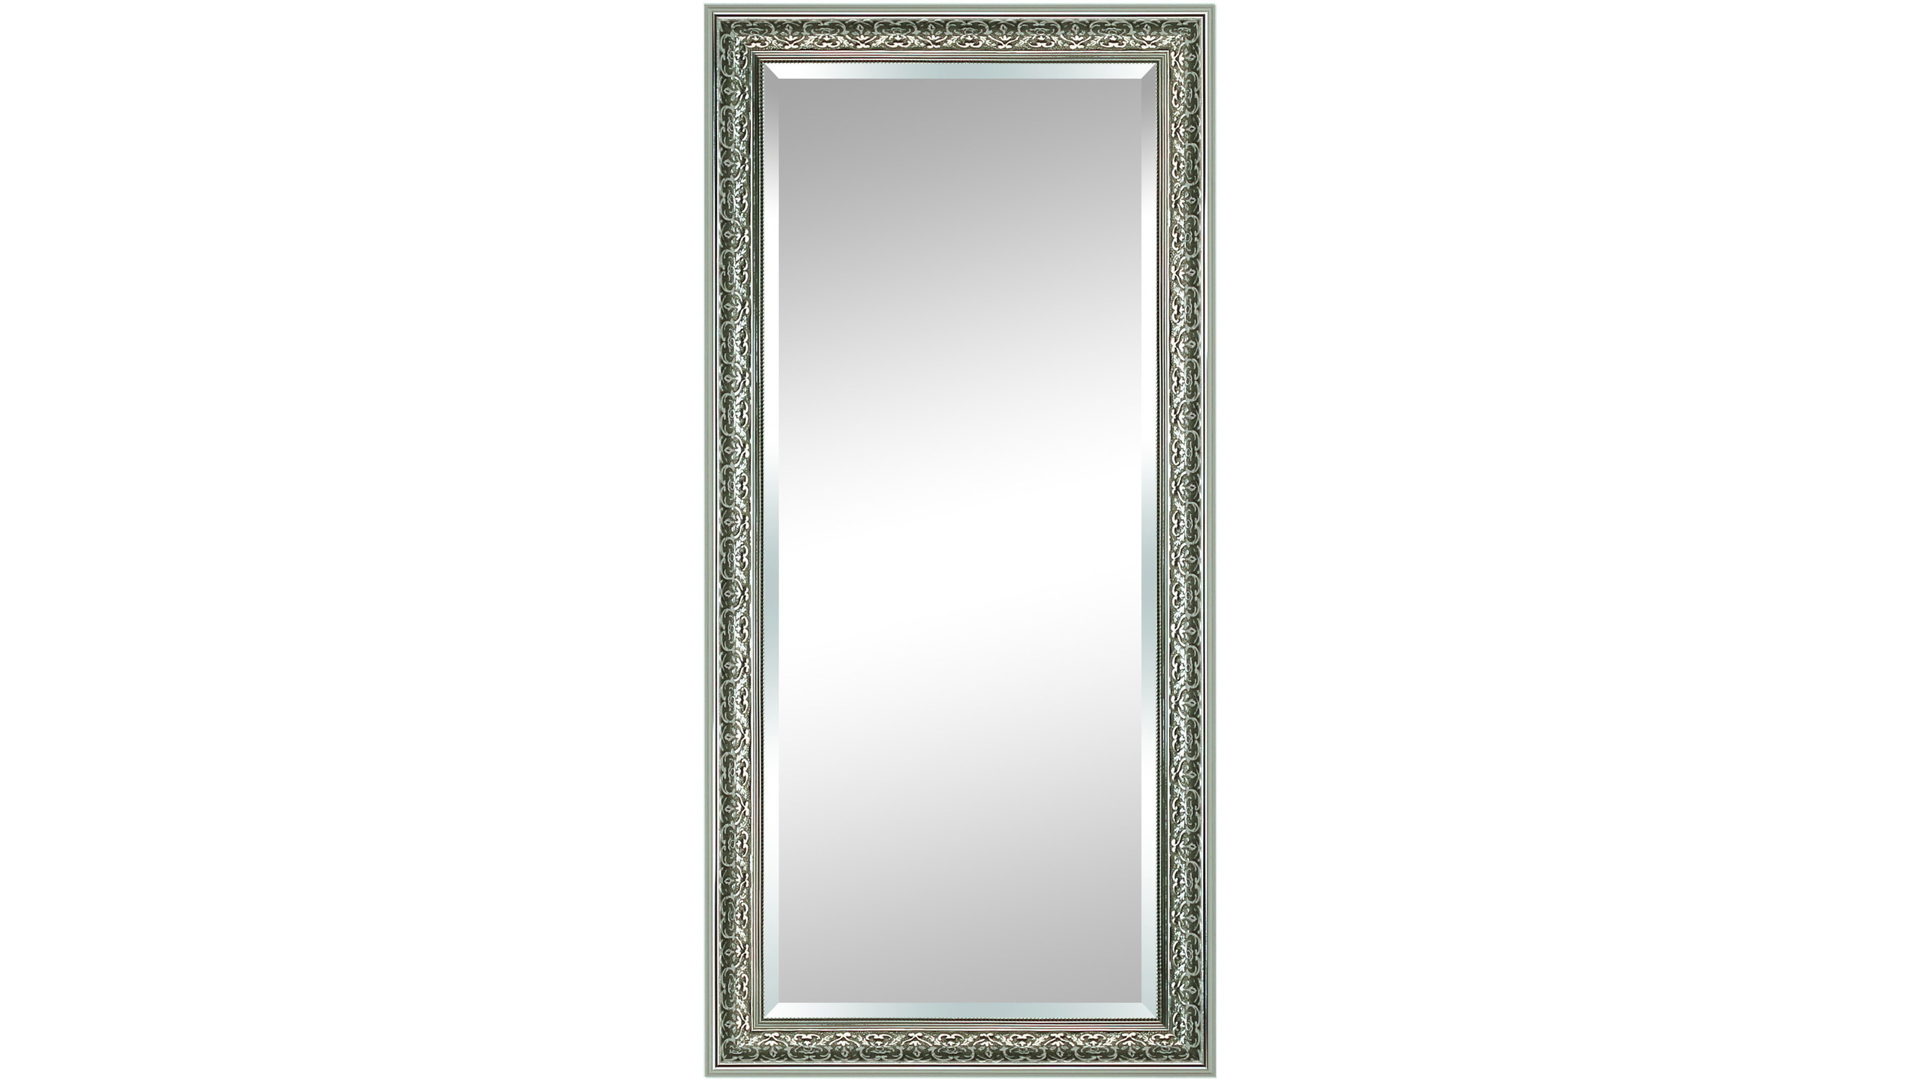 Wandspiegel Len-fra aus Kunststoff Spiegel in Anthrazit Silber LEN-FRA Wandspiegel Garderobenspiegel NIZZA 01 silber-anthrazitfarbener Kunststoffrahmen - ca. 55 x 115 cm